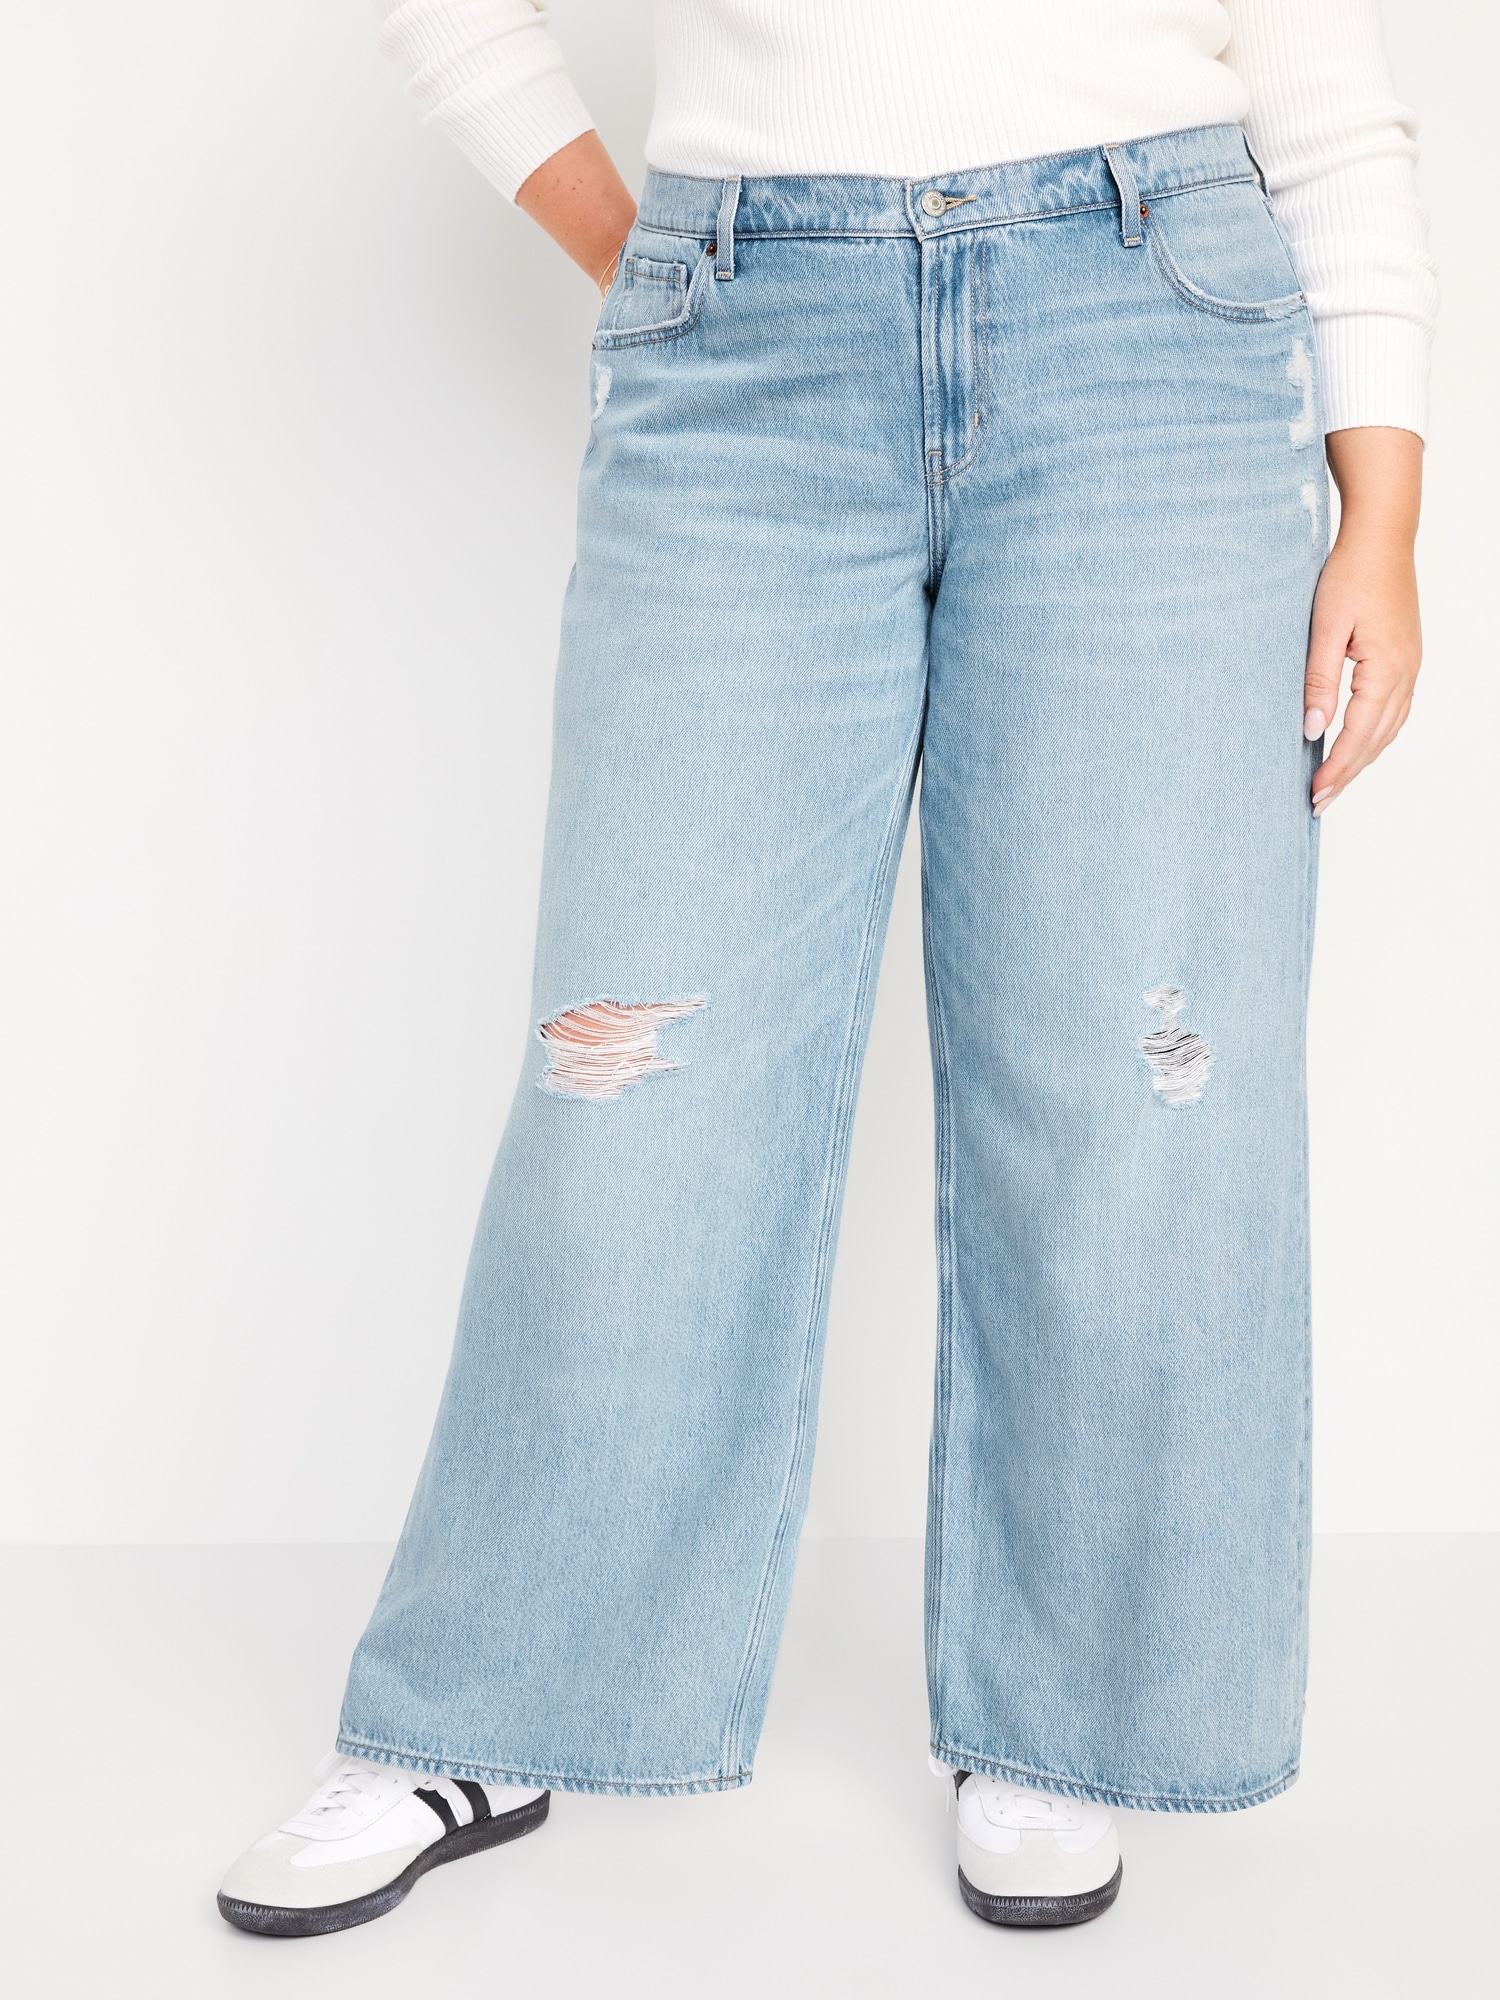 Ny&C womens Blue lowrise wide leg crop jeans size 10 - beyond exchange